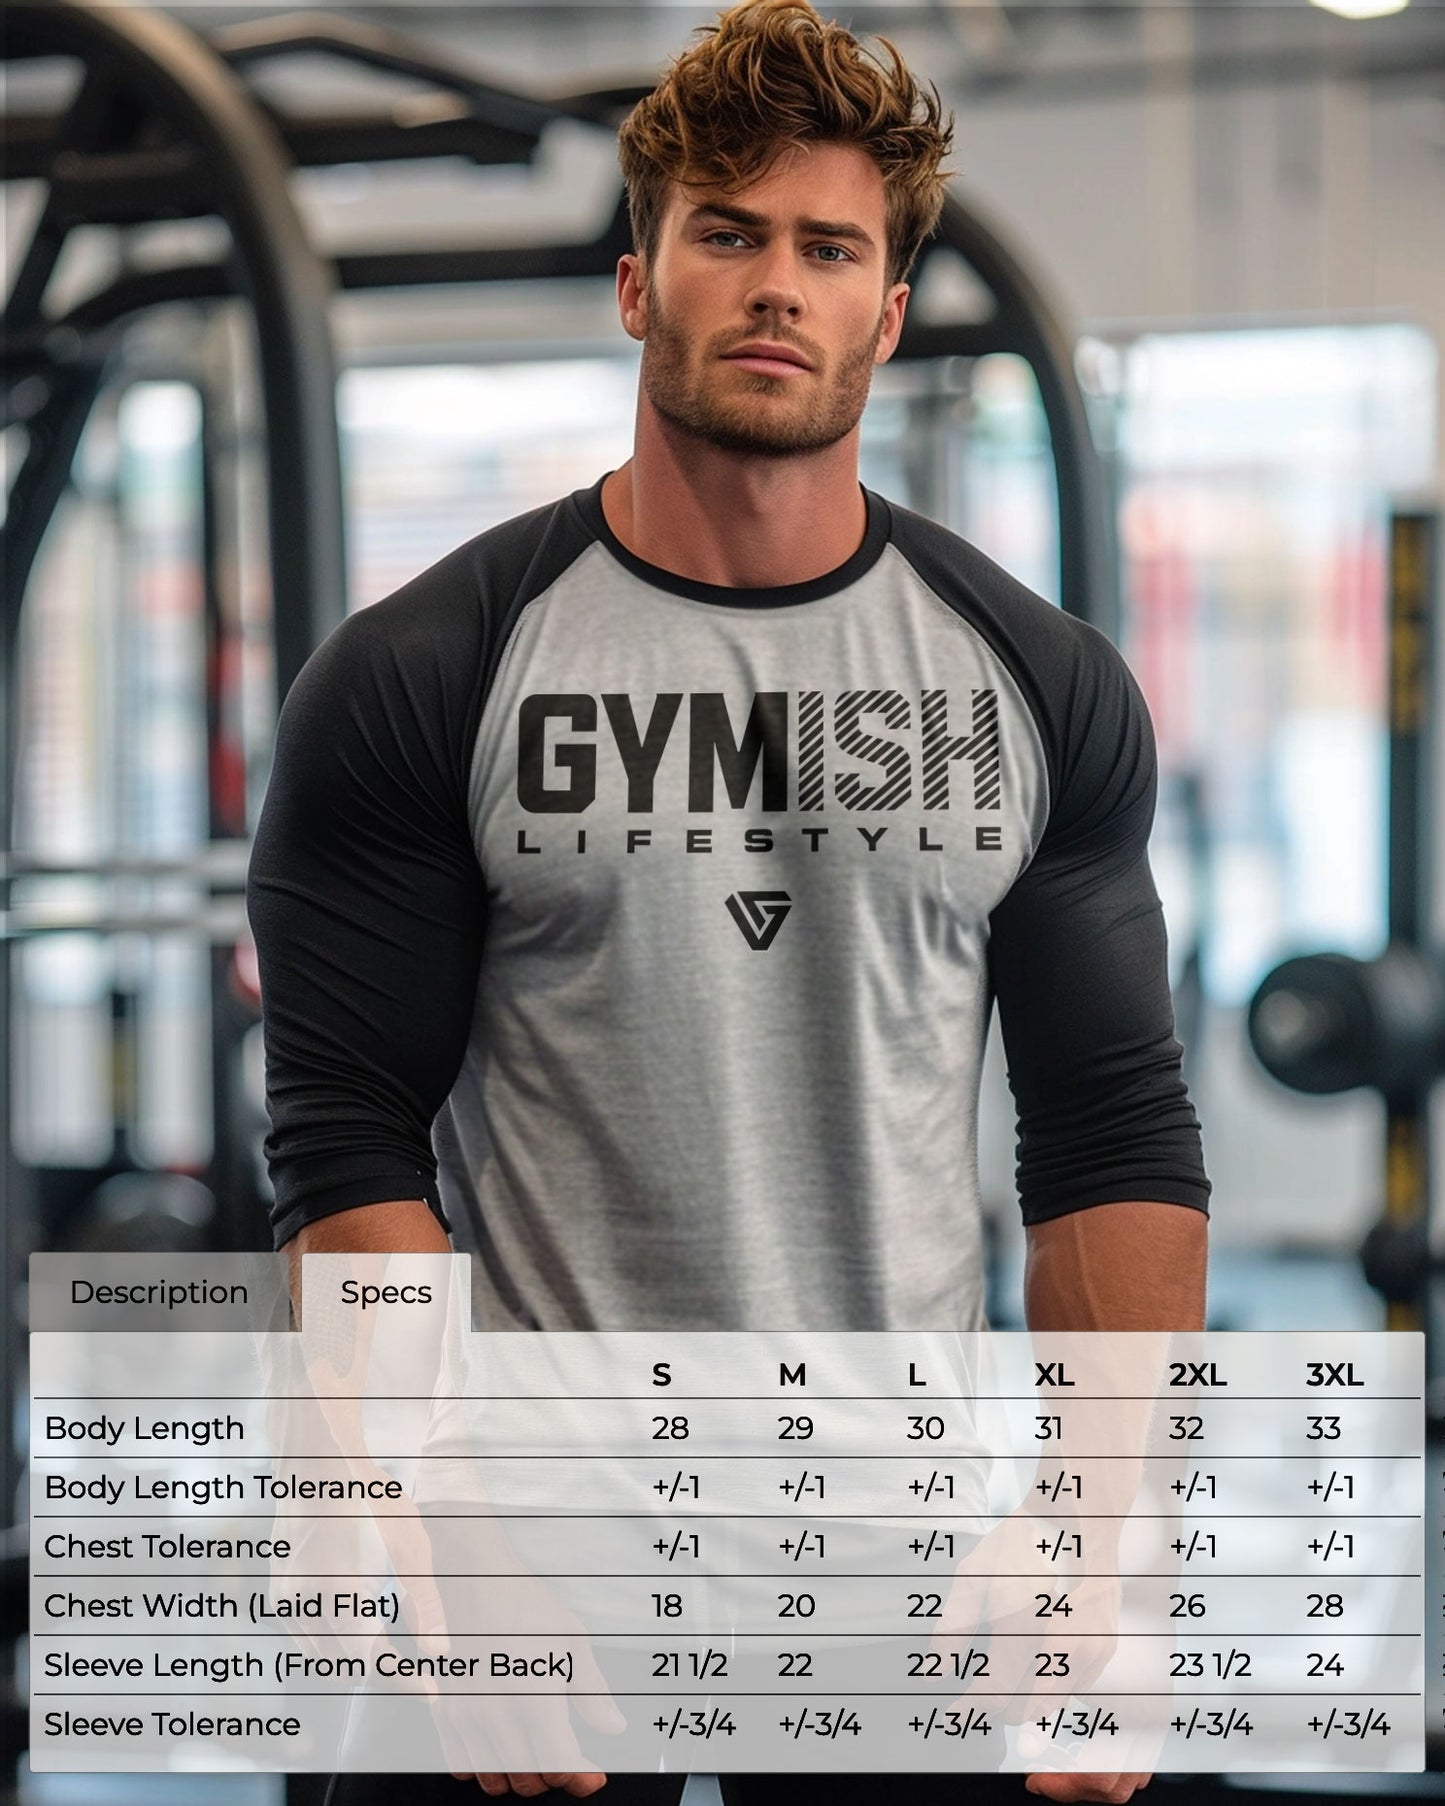 90- RAGLAN CREATED EQUAL BENCH Workout Gym T-Shirt for Men